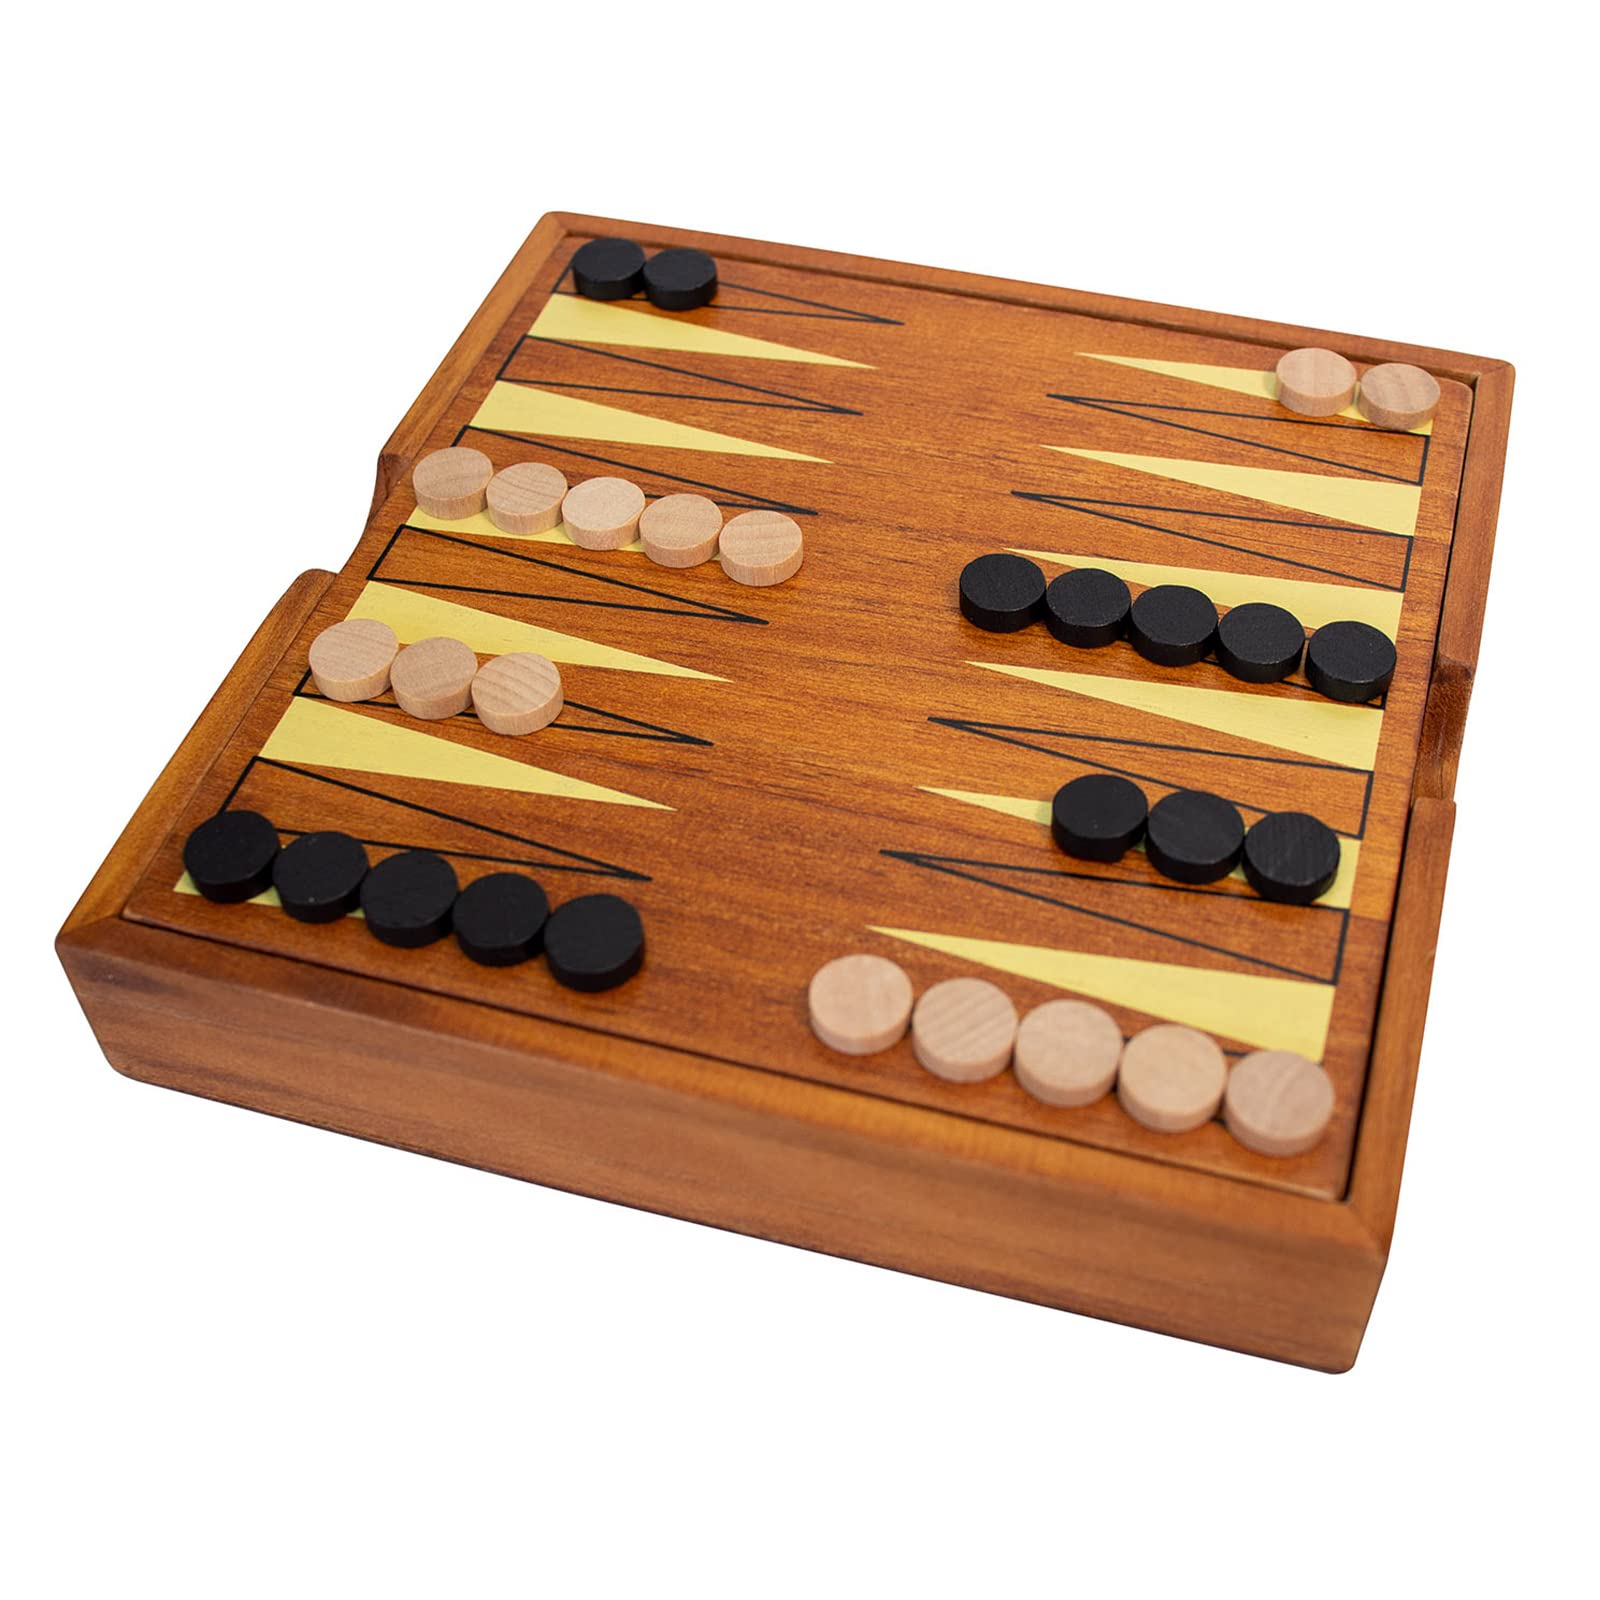 I bought a new backgammon game! : backgammon